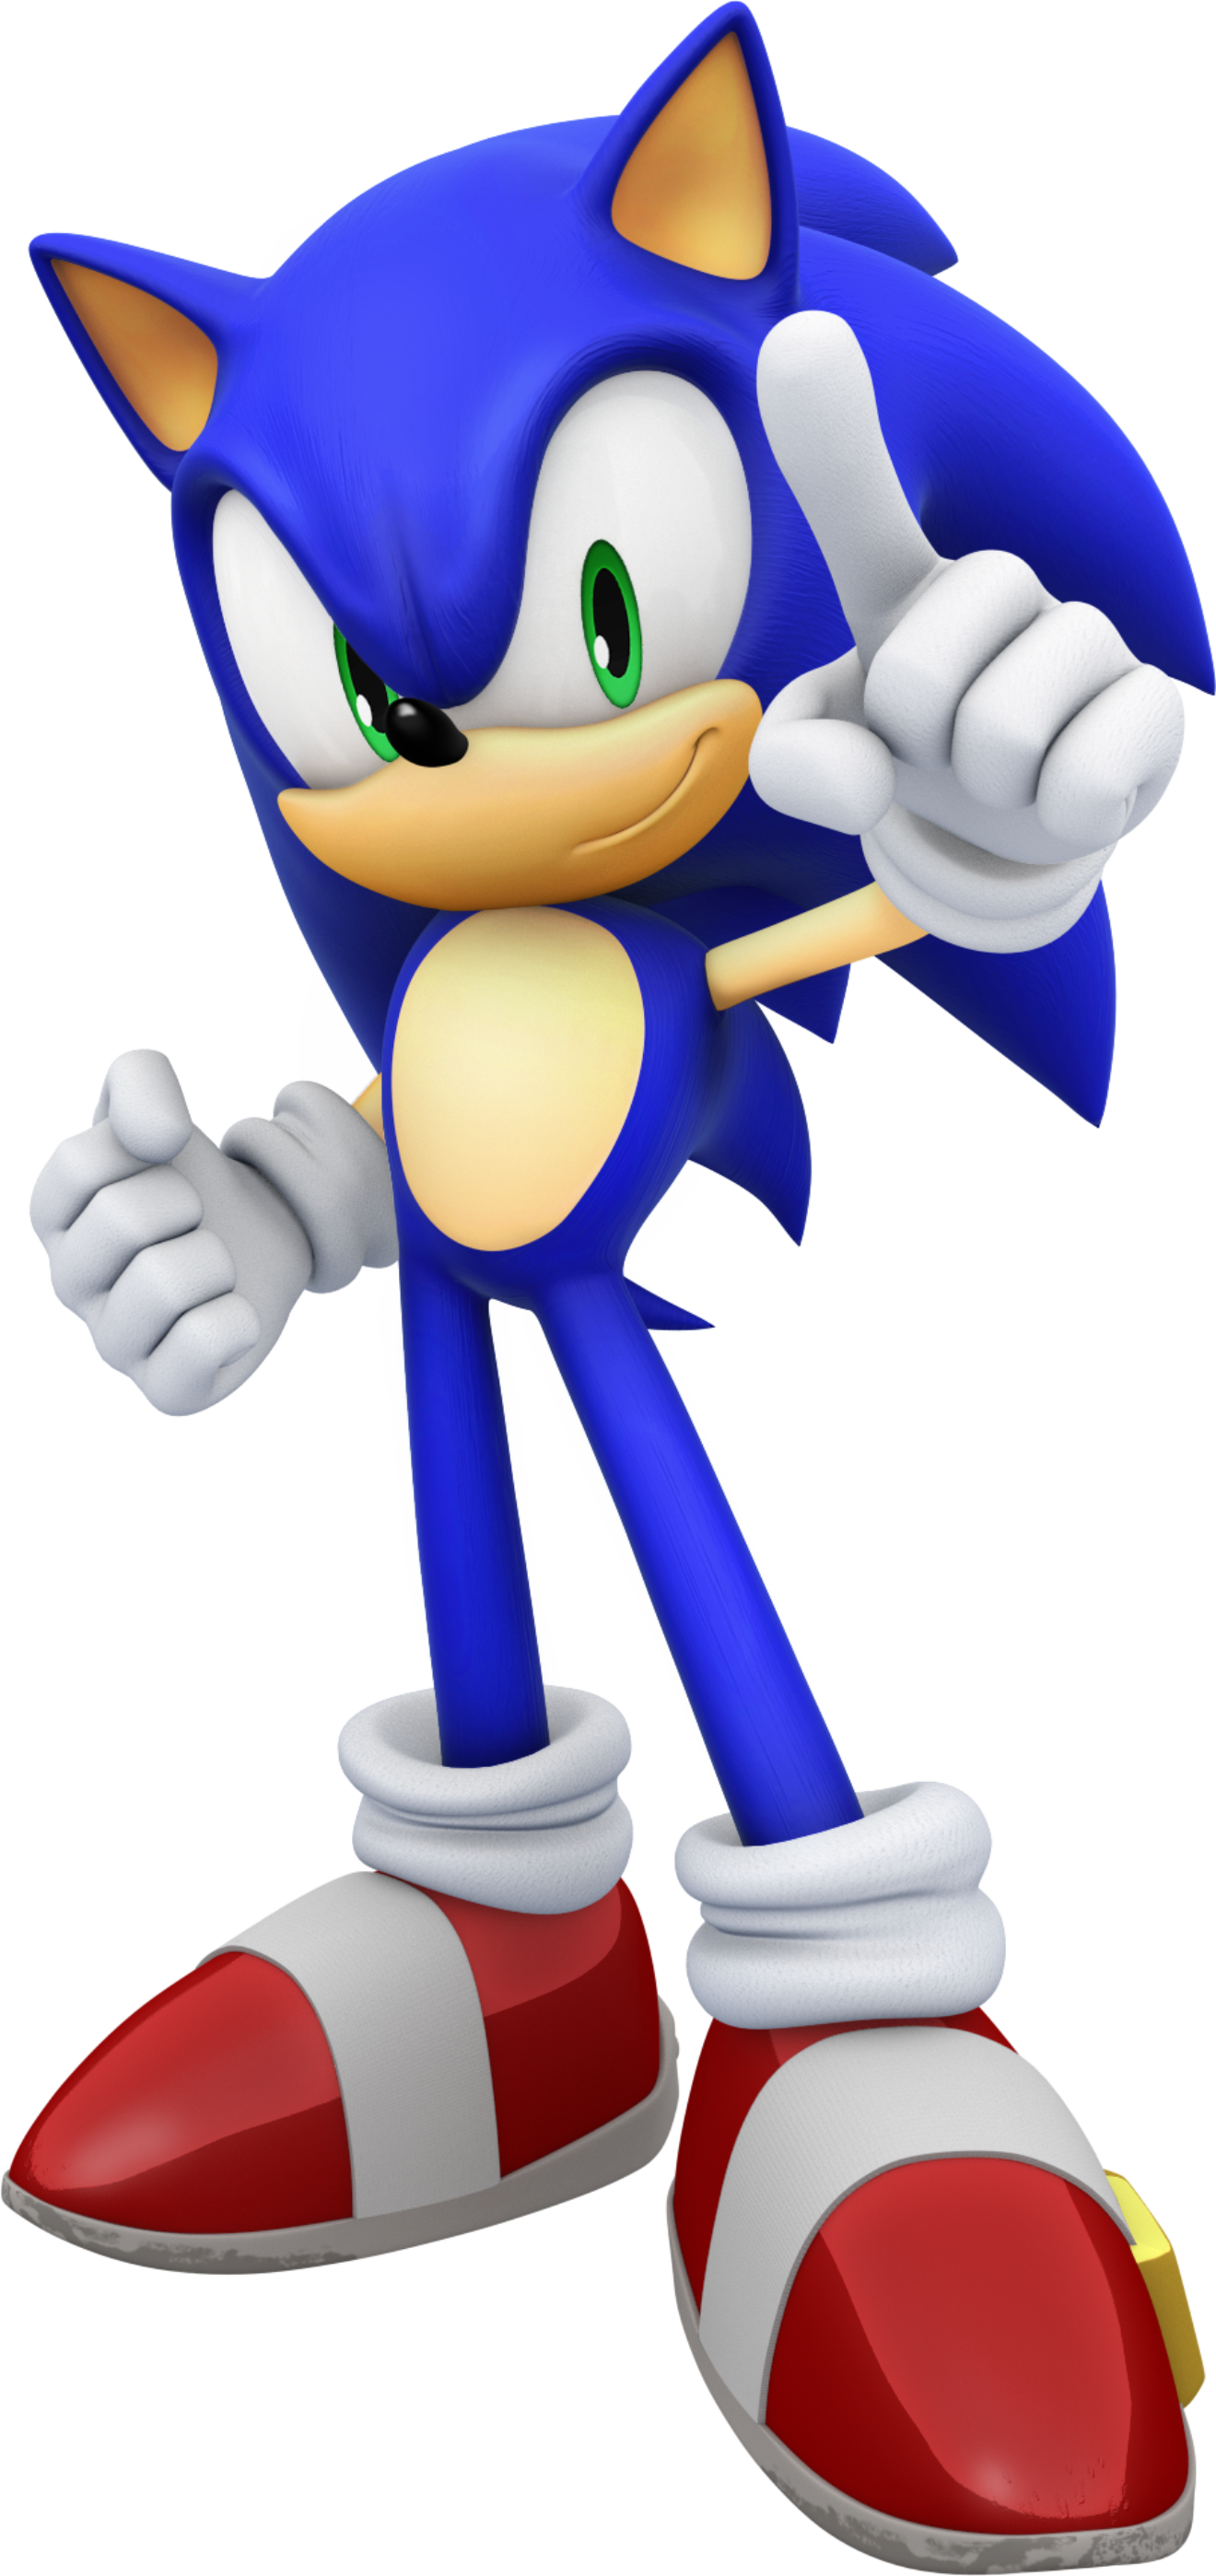 Sonic the Hedgehog transparent image download, size: 2824x3350px